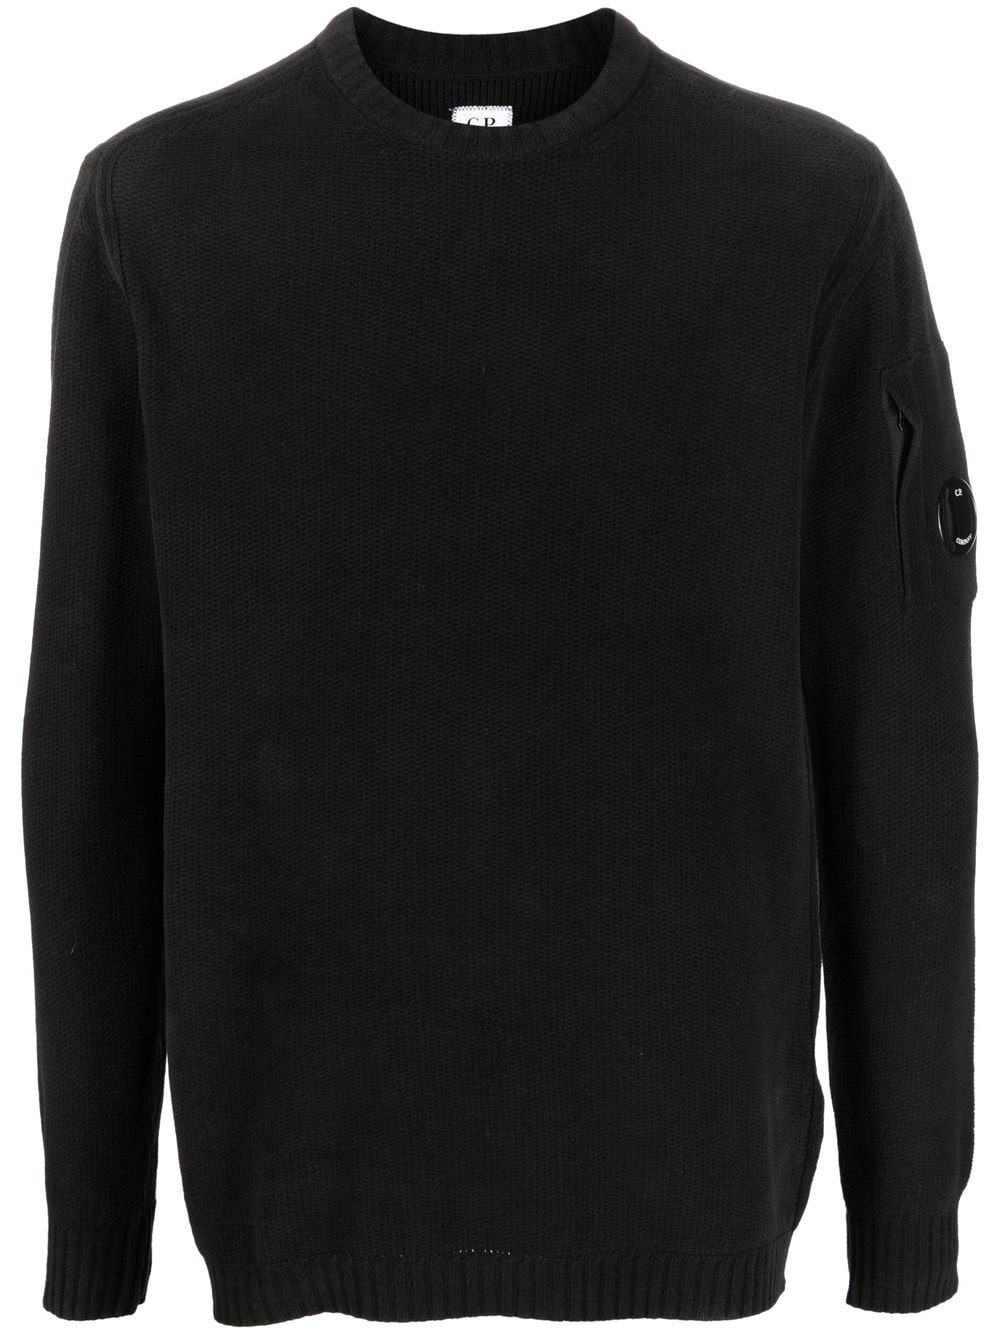 C.P. Company crew neck cotton sweater - Black von C.P. Company